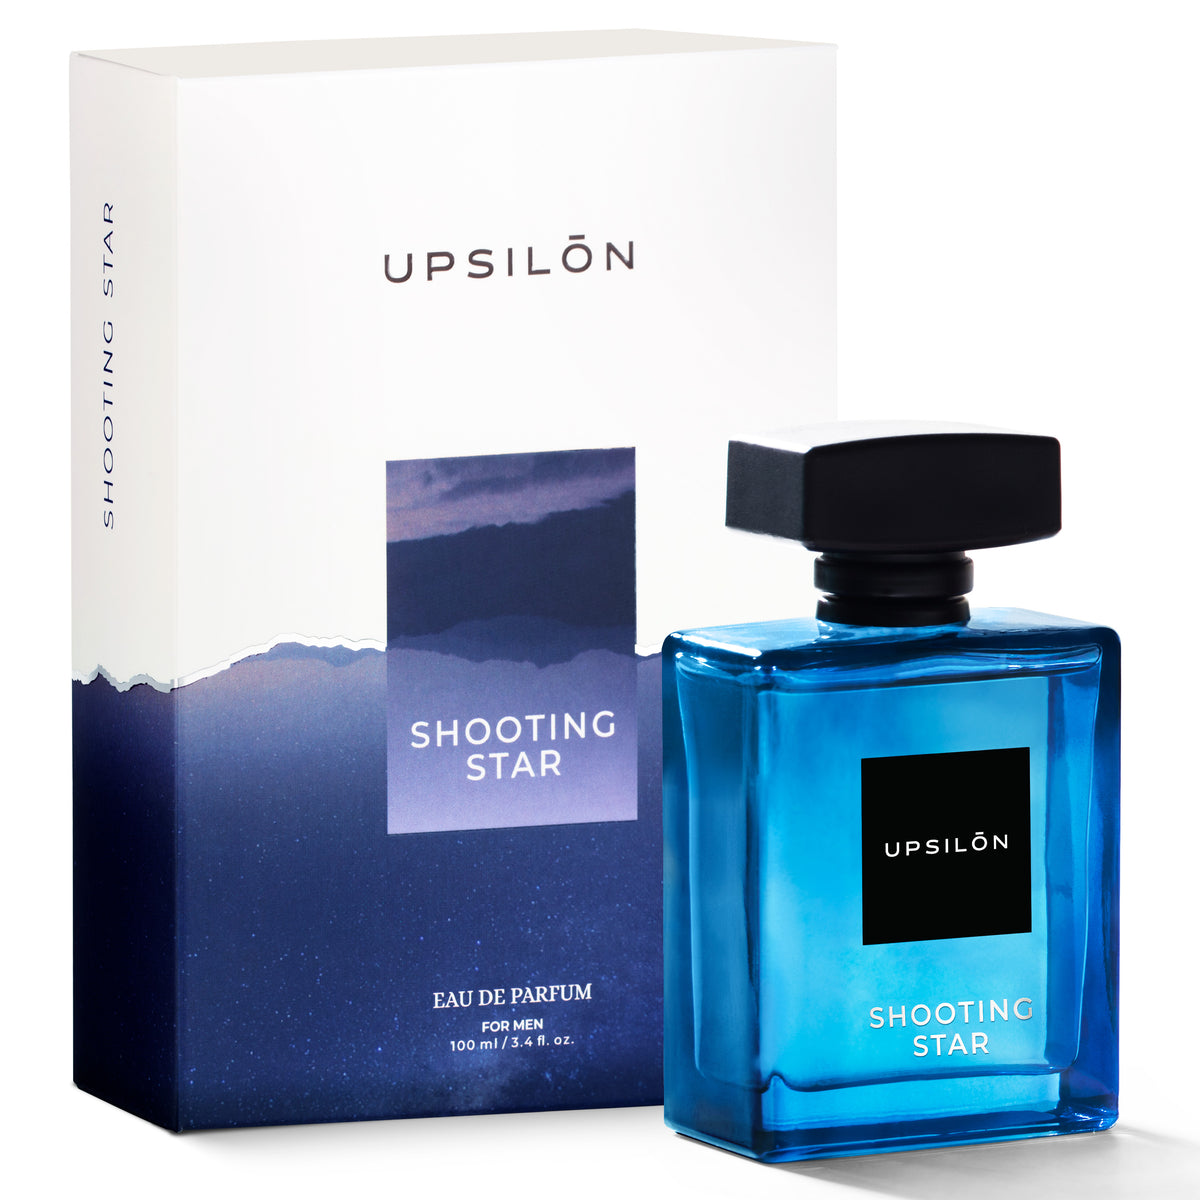 Get Upsilon Shooting Star Perfume